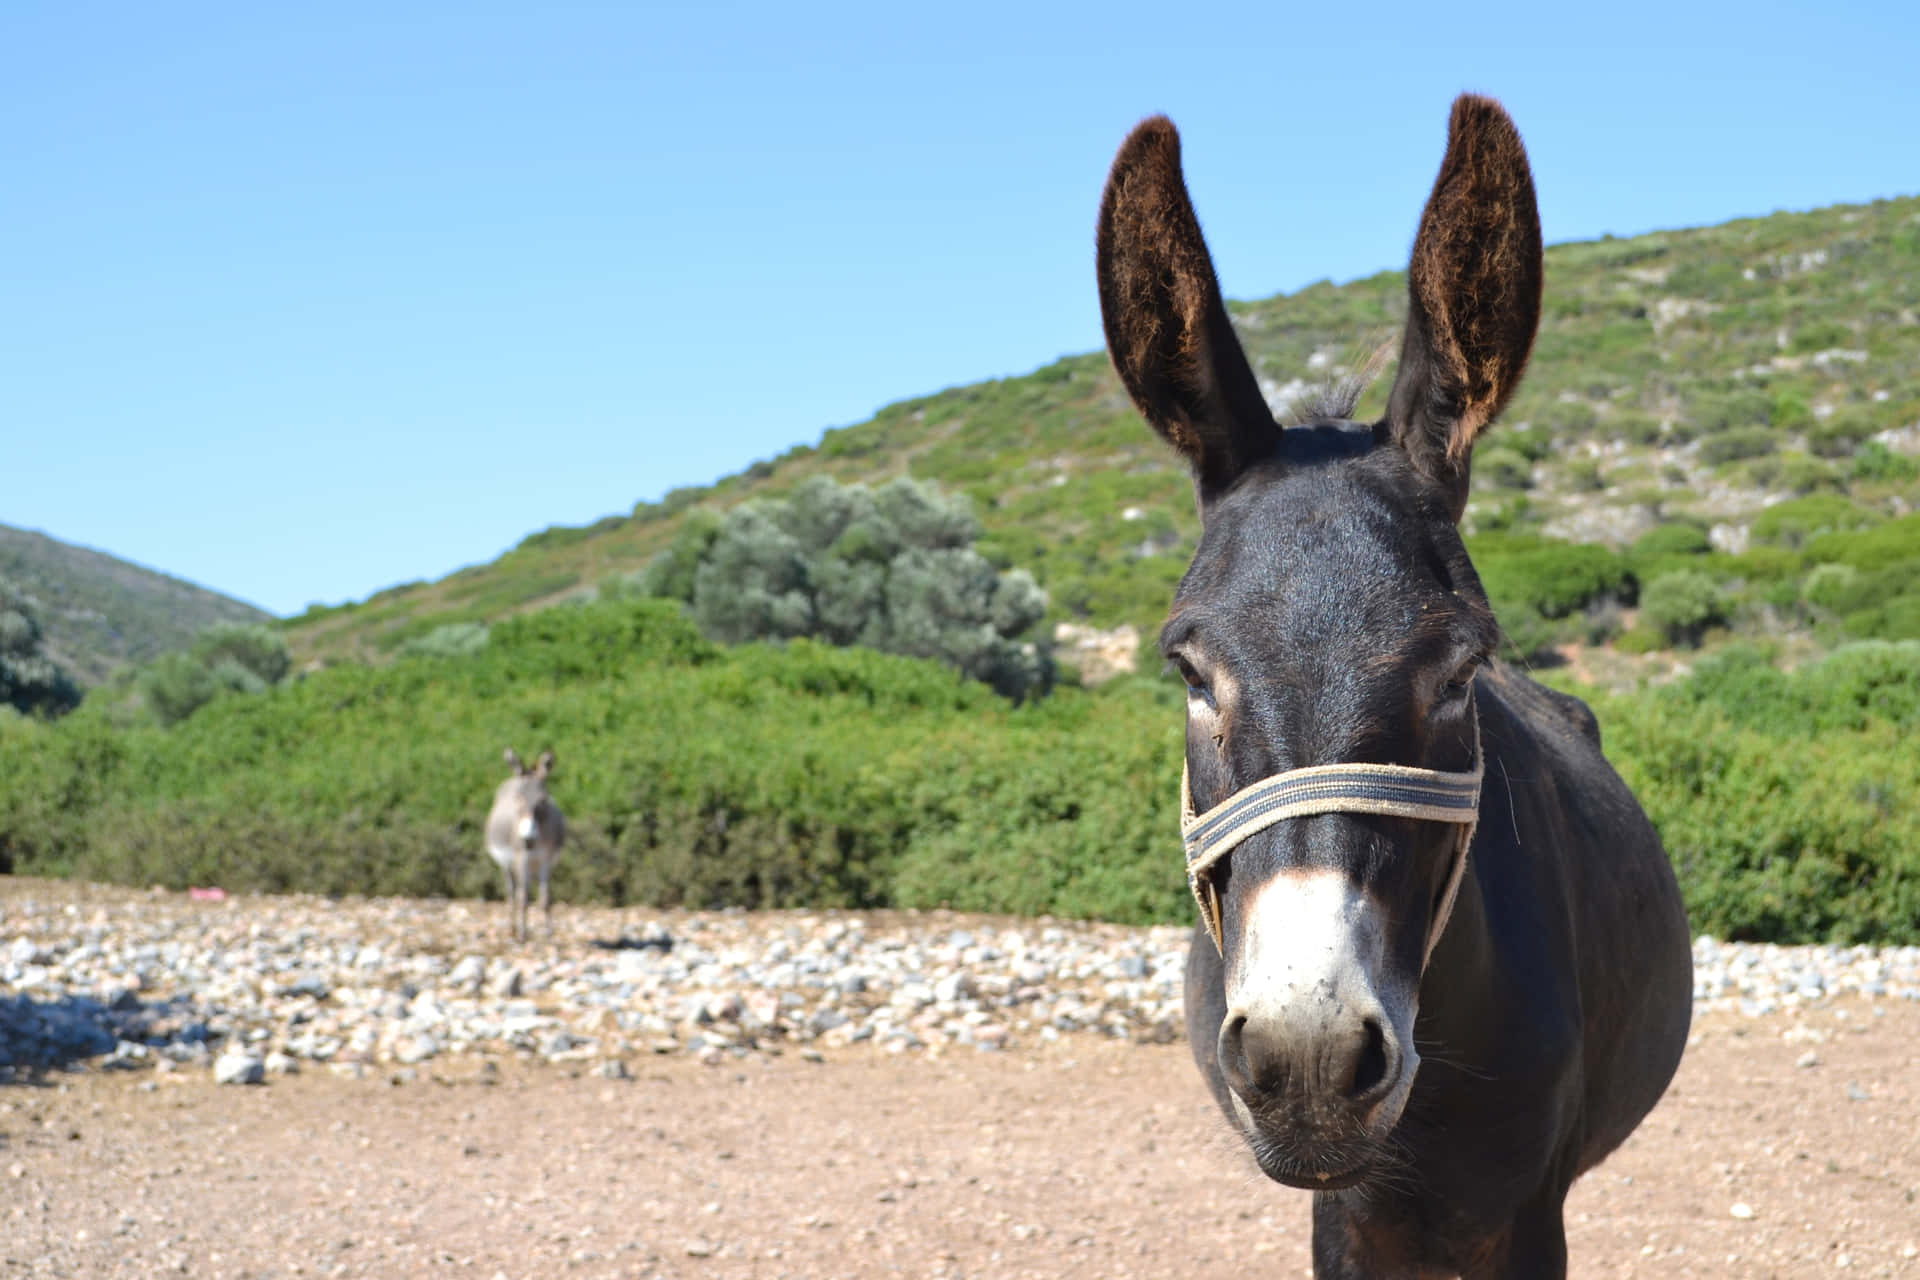 A joyful donkey enjoying its freedom in the countryside.